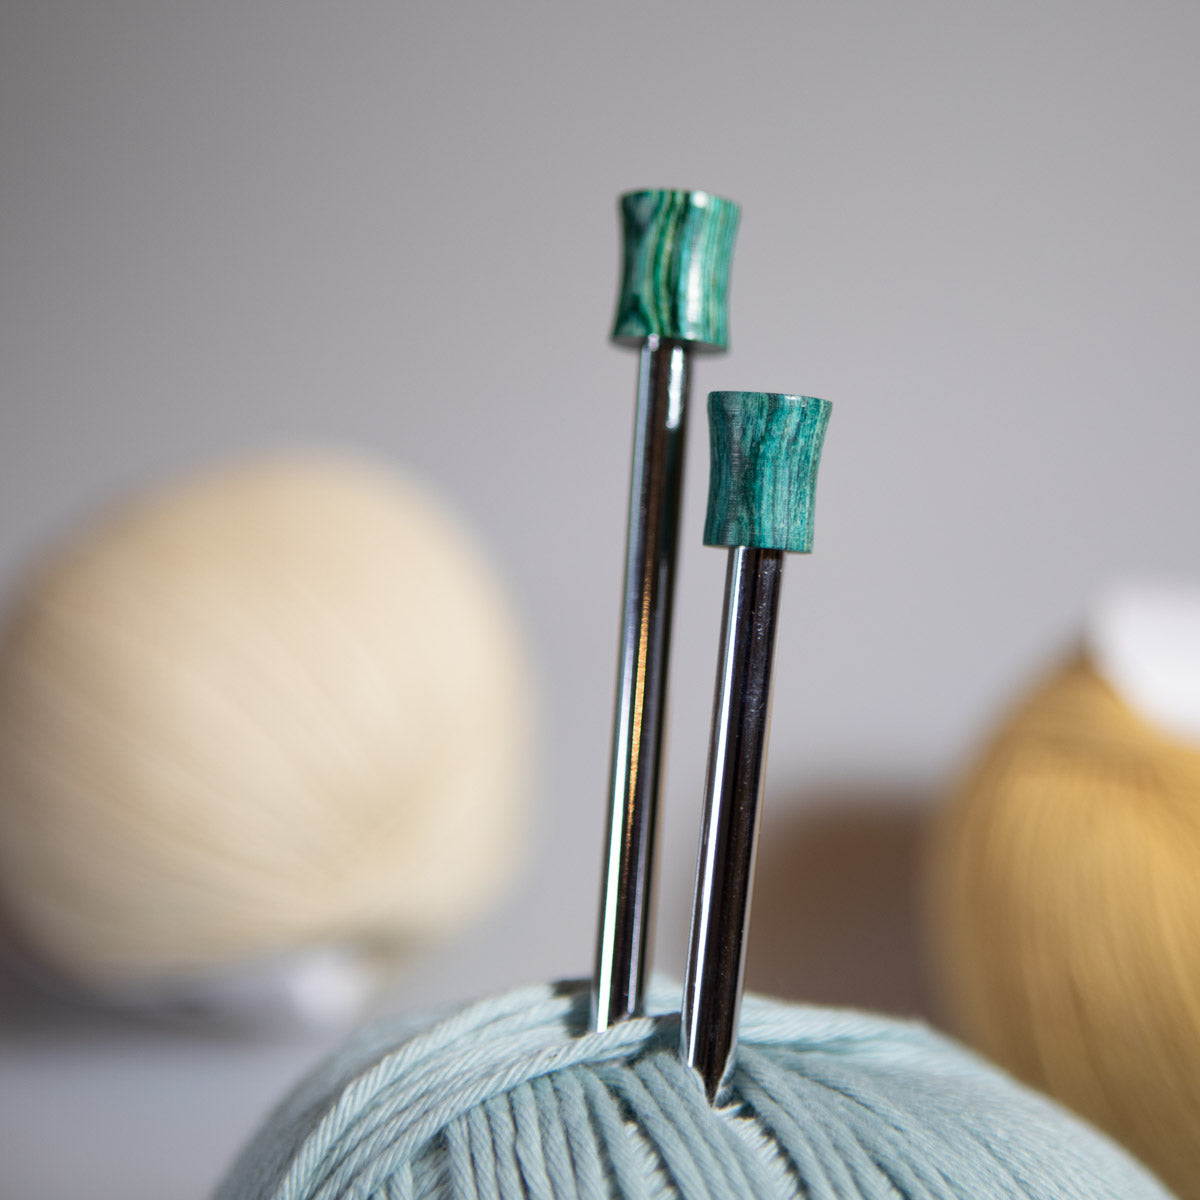 Knitter's Pride Zing Needle Set - Ayarna